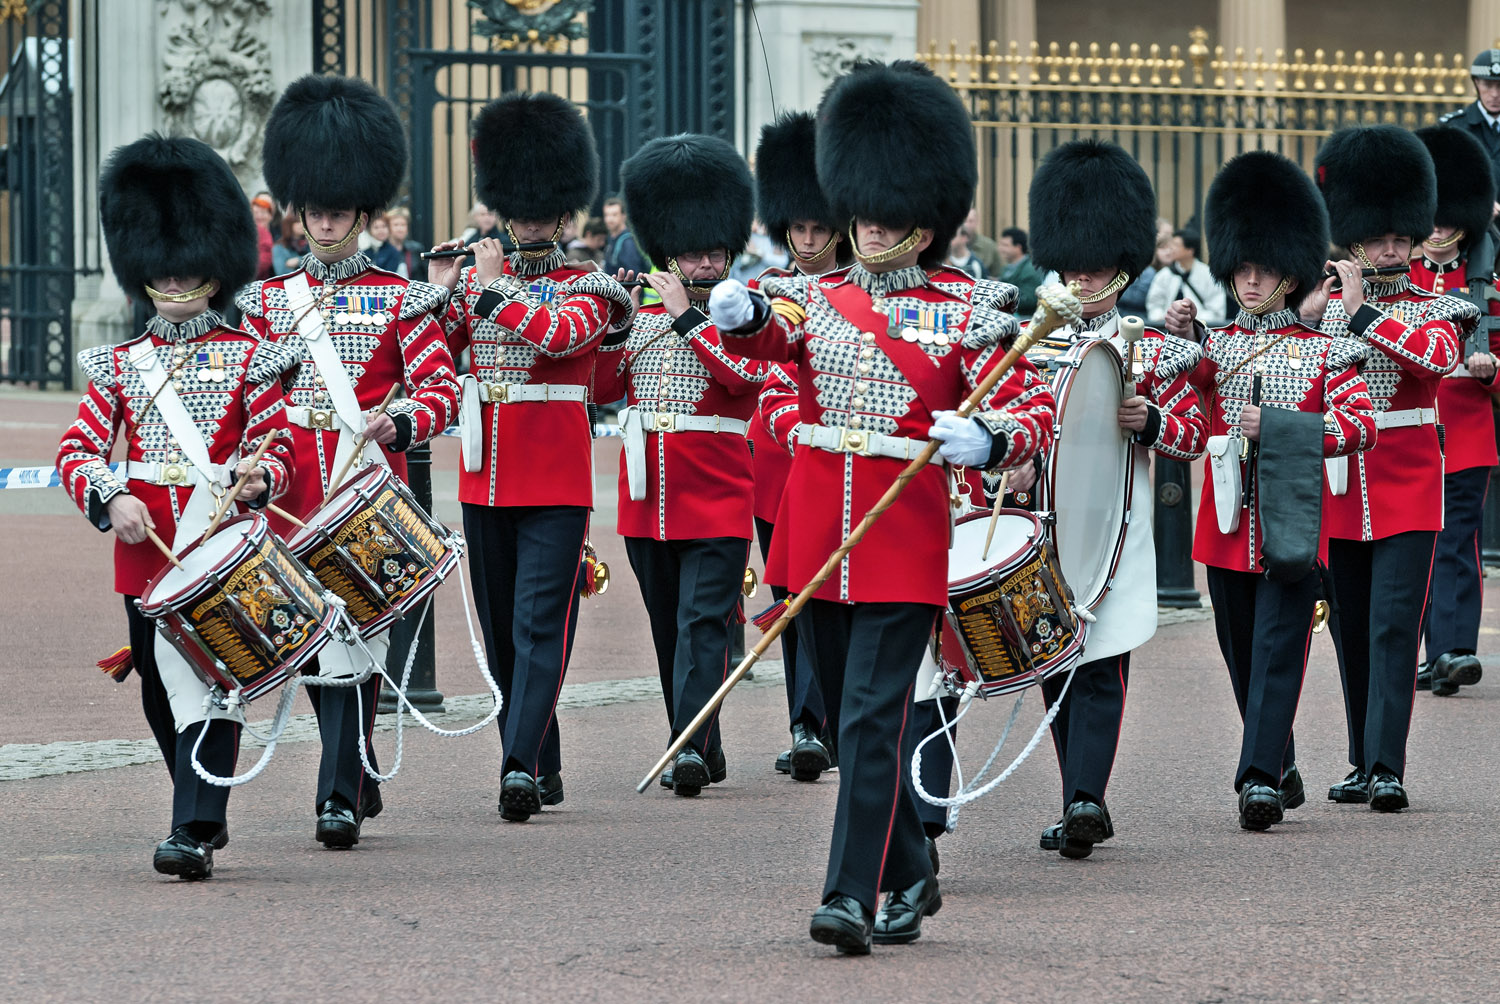 Royal Guards, Buckingham Palace, London